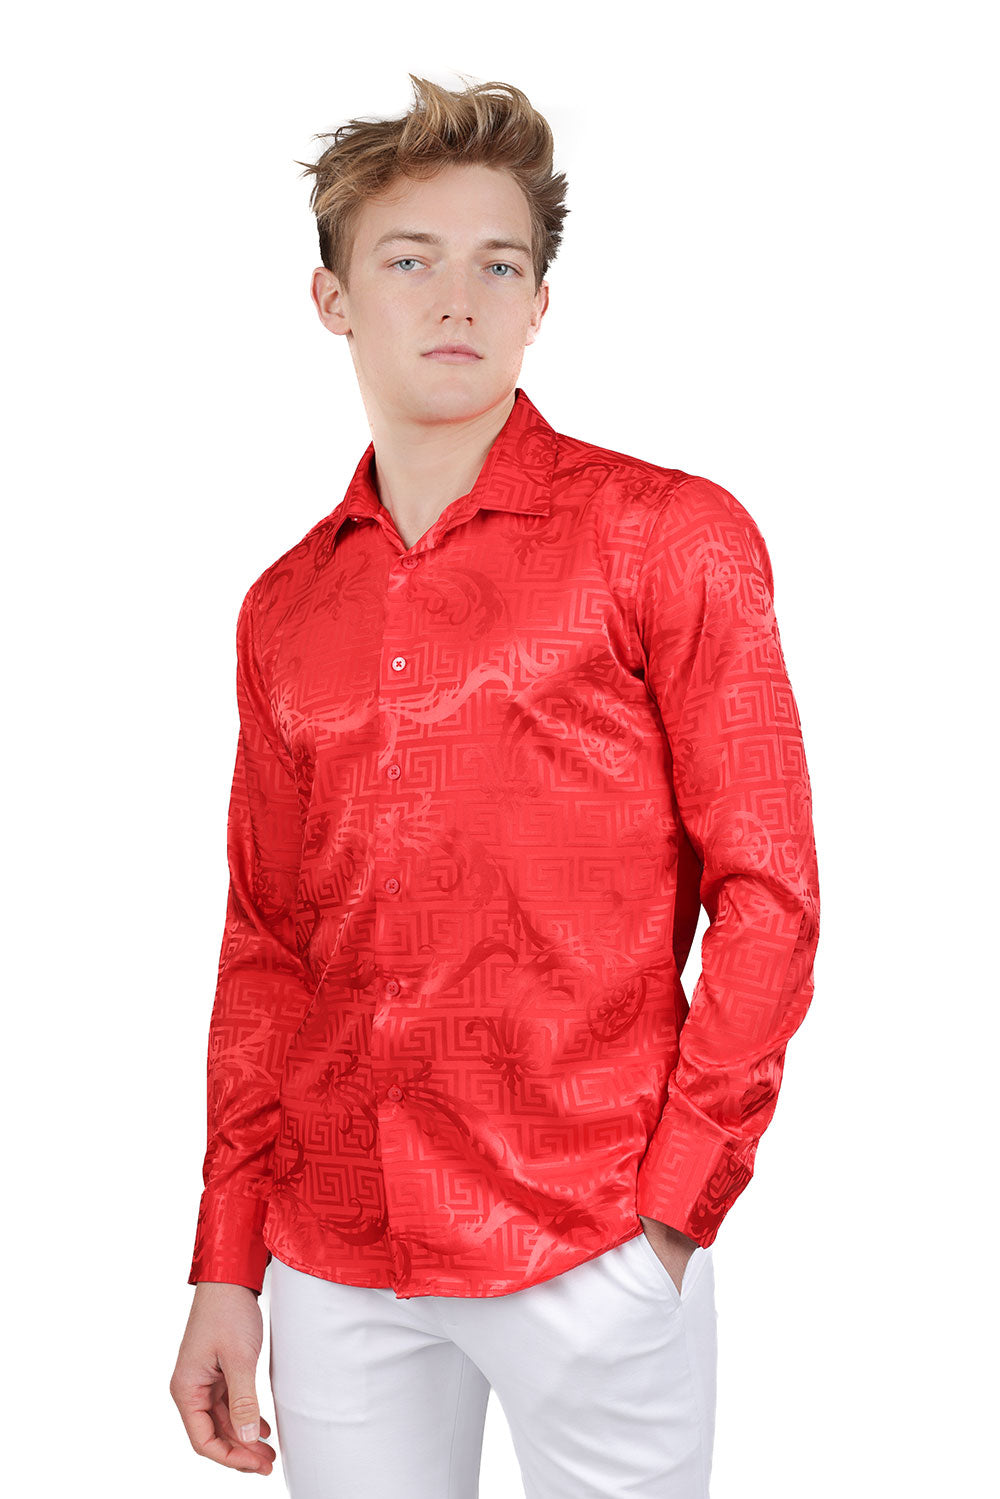 Barabas Wholesale Men's Greek Key Baroque Long Sleeve Button Down Shirt B313 red